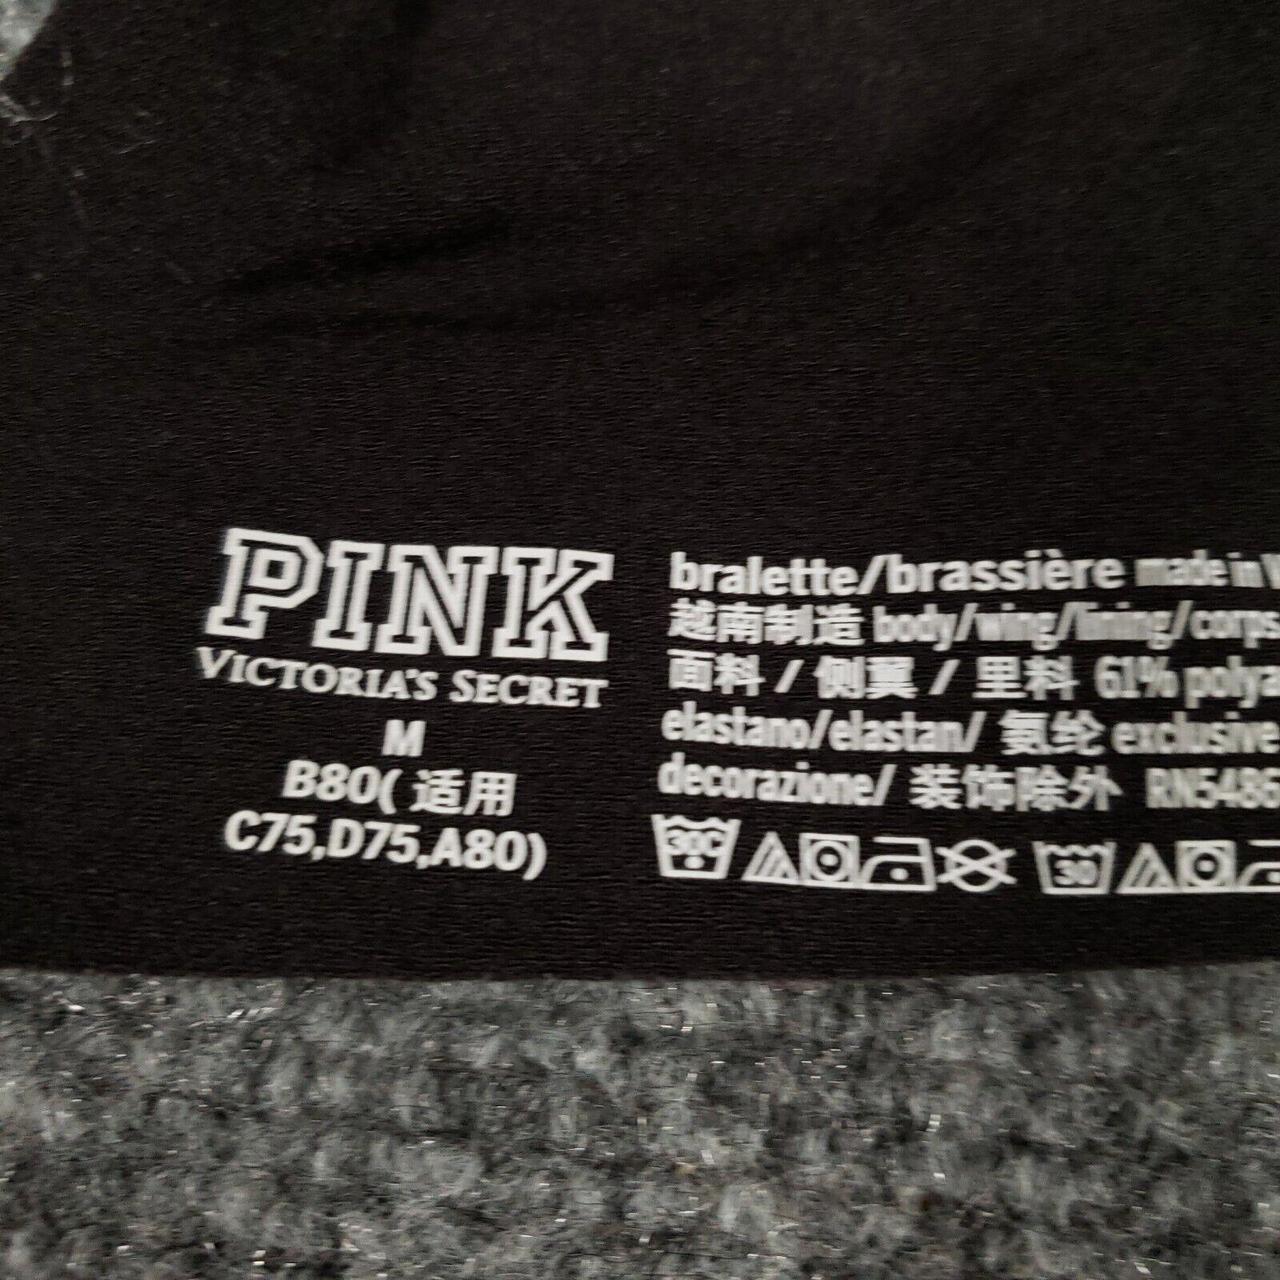 Victoria's Secret Women's Black and Pink Vests-tanks-camis (3)